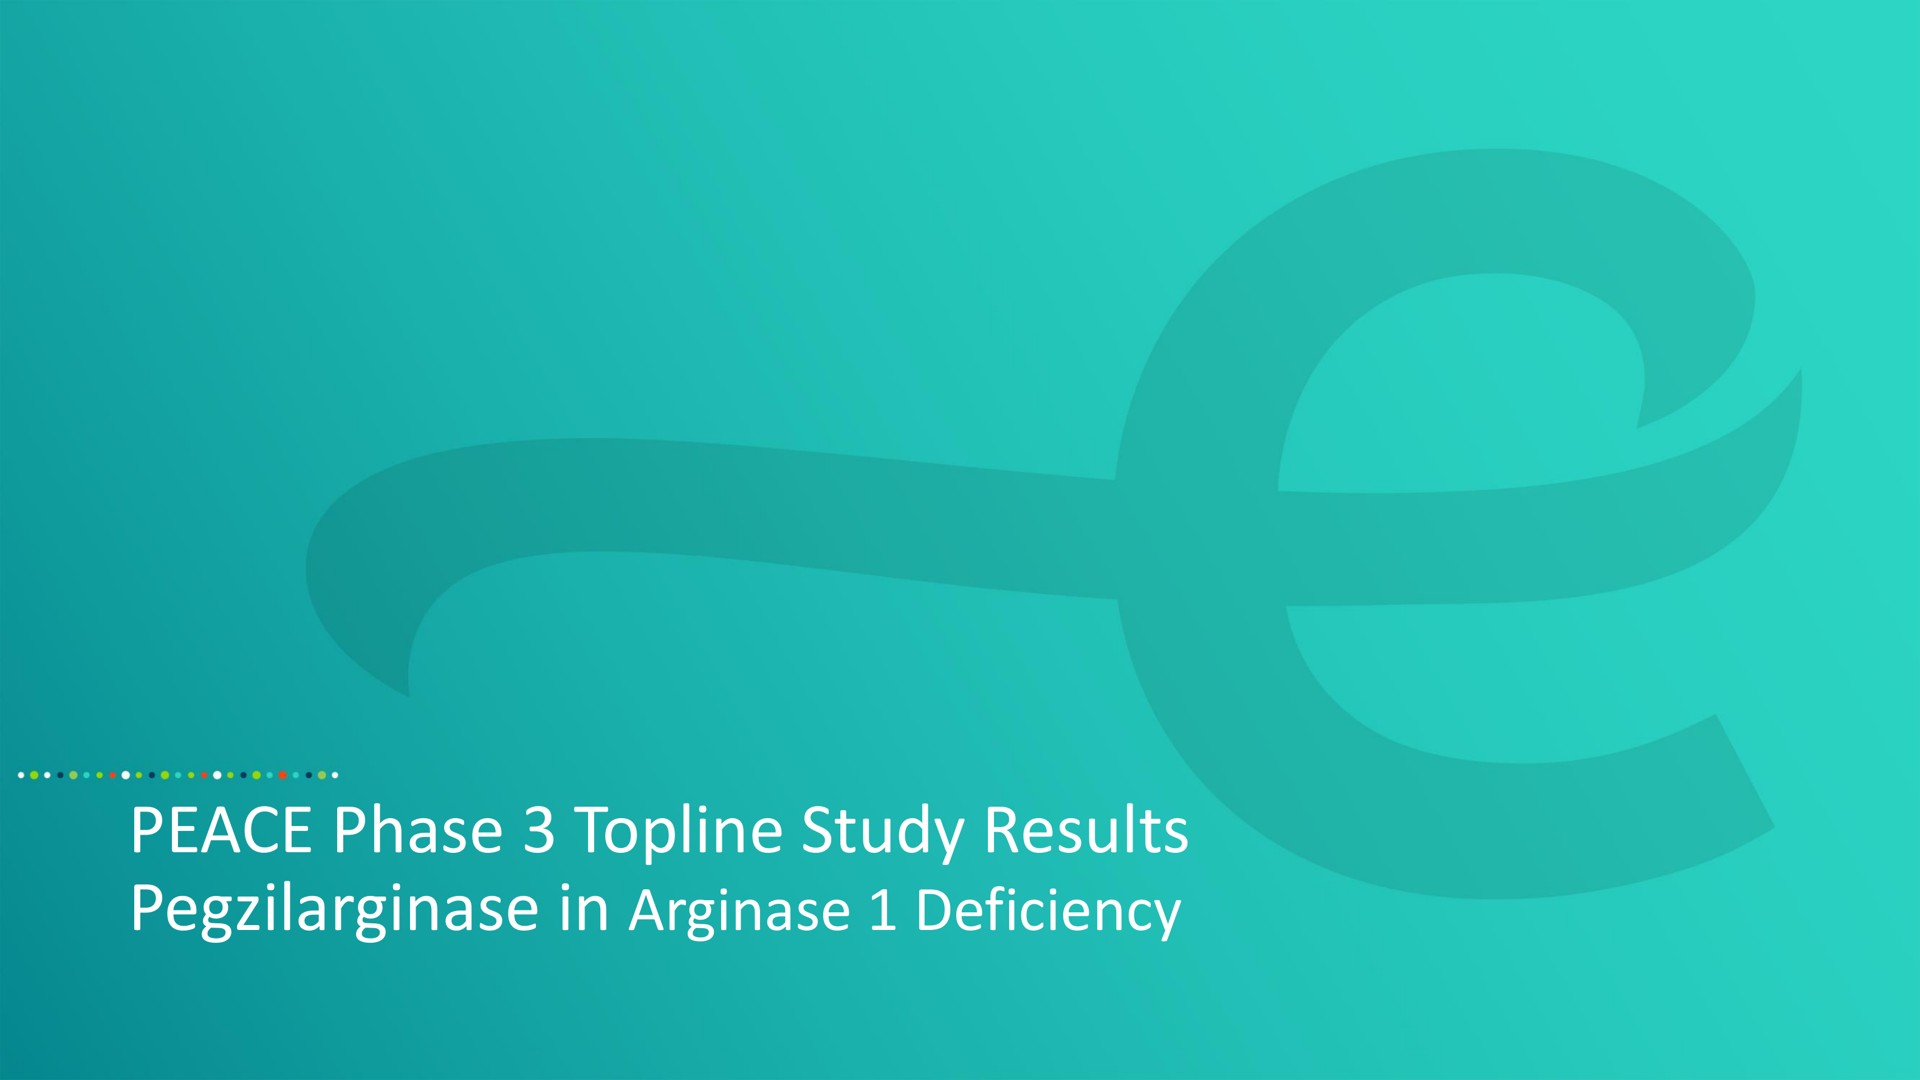 peace phase topline study results in deficiency | Aeglea BioTherapeutics